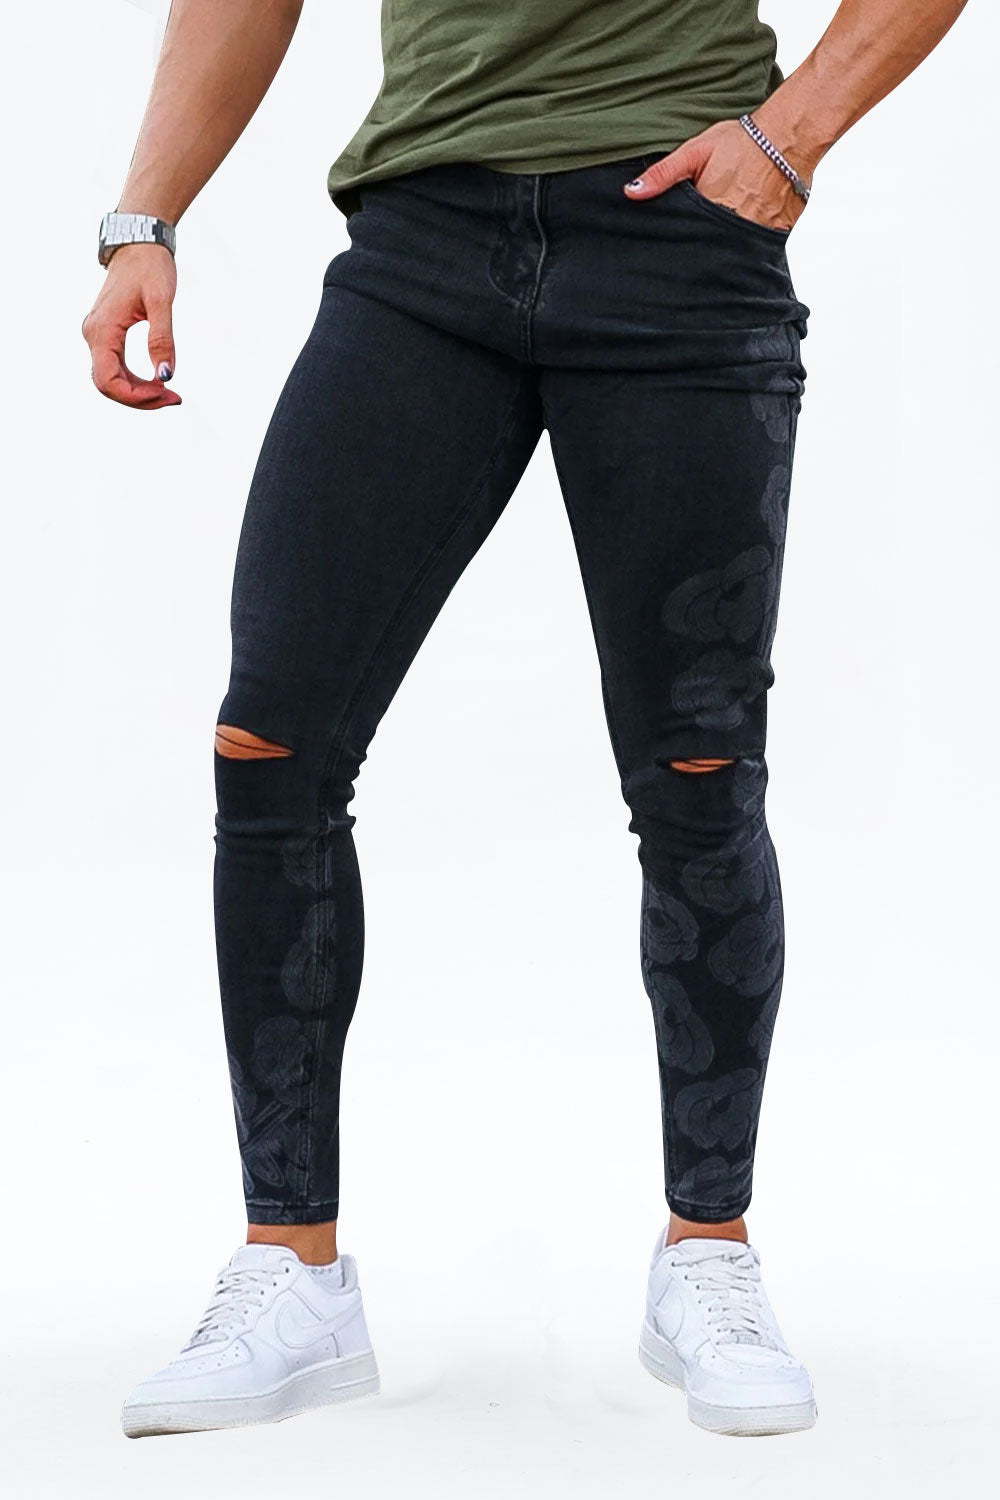 GINGTTO Men's Black Ripped Skinny Jean - Vintage for Sale 36